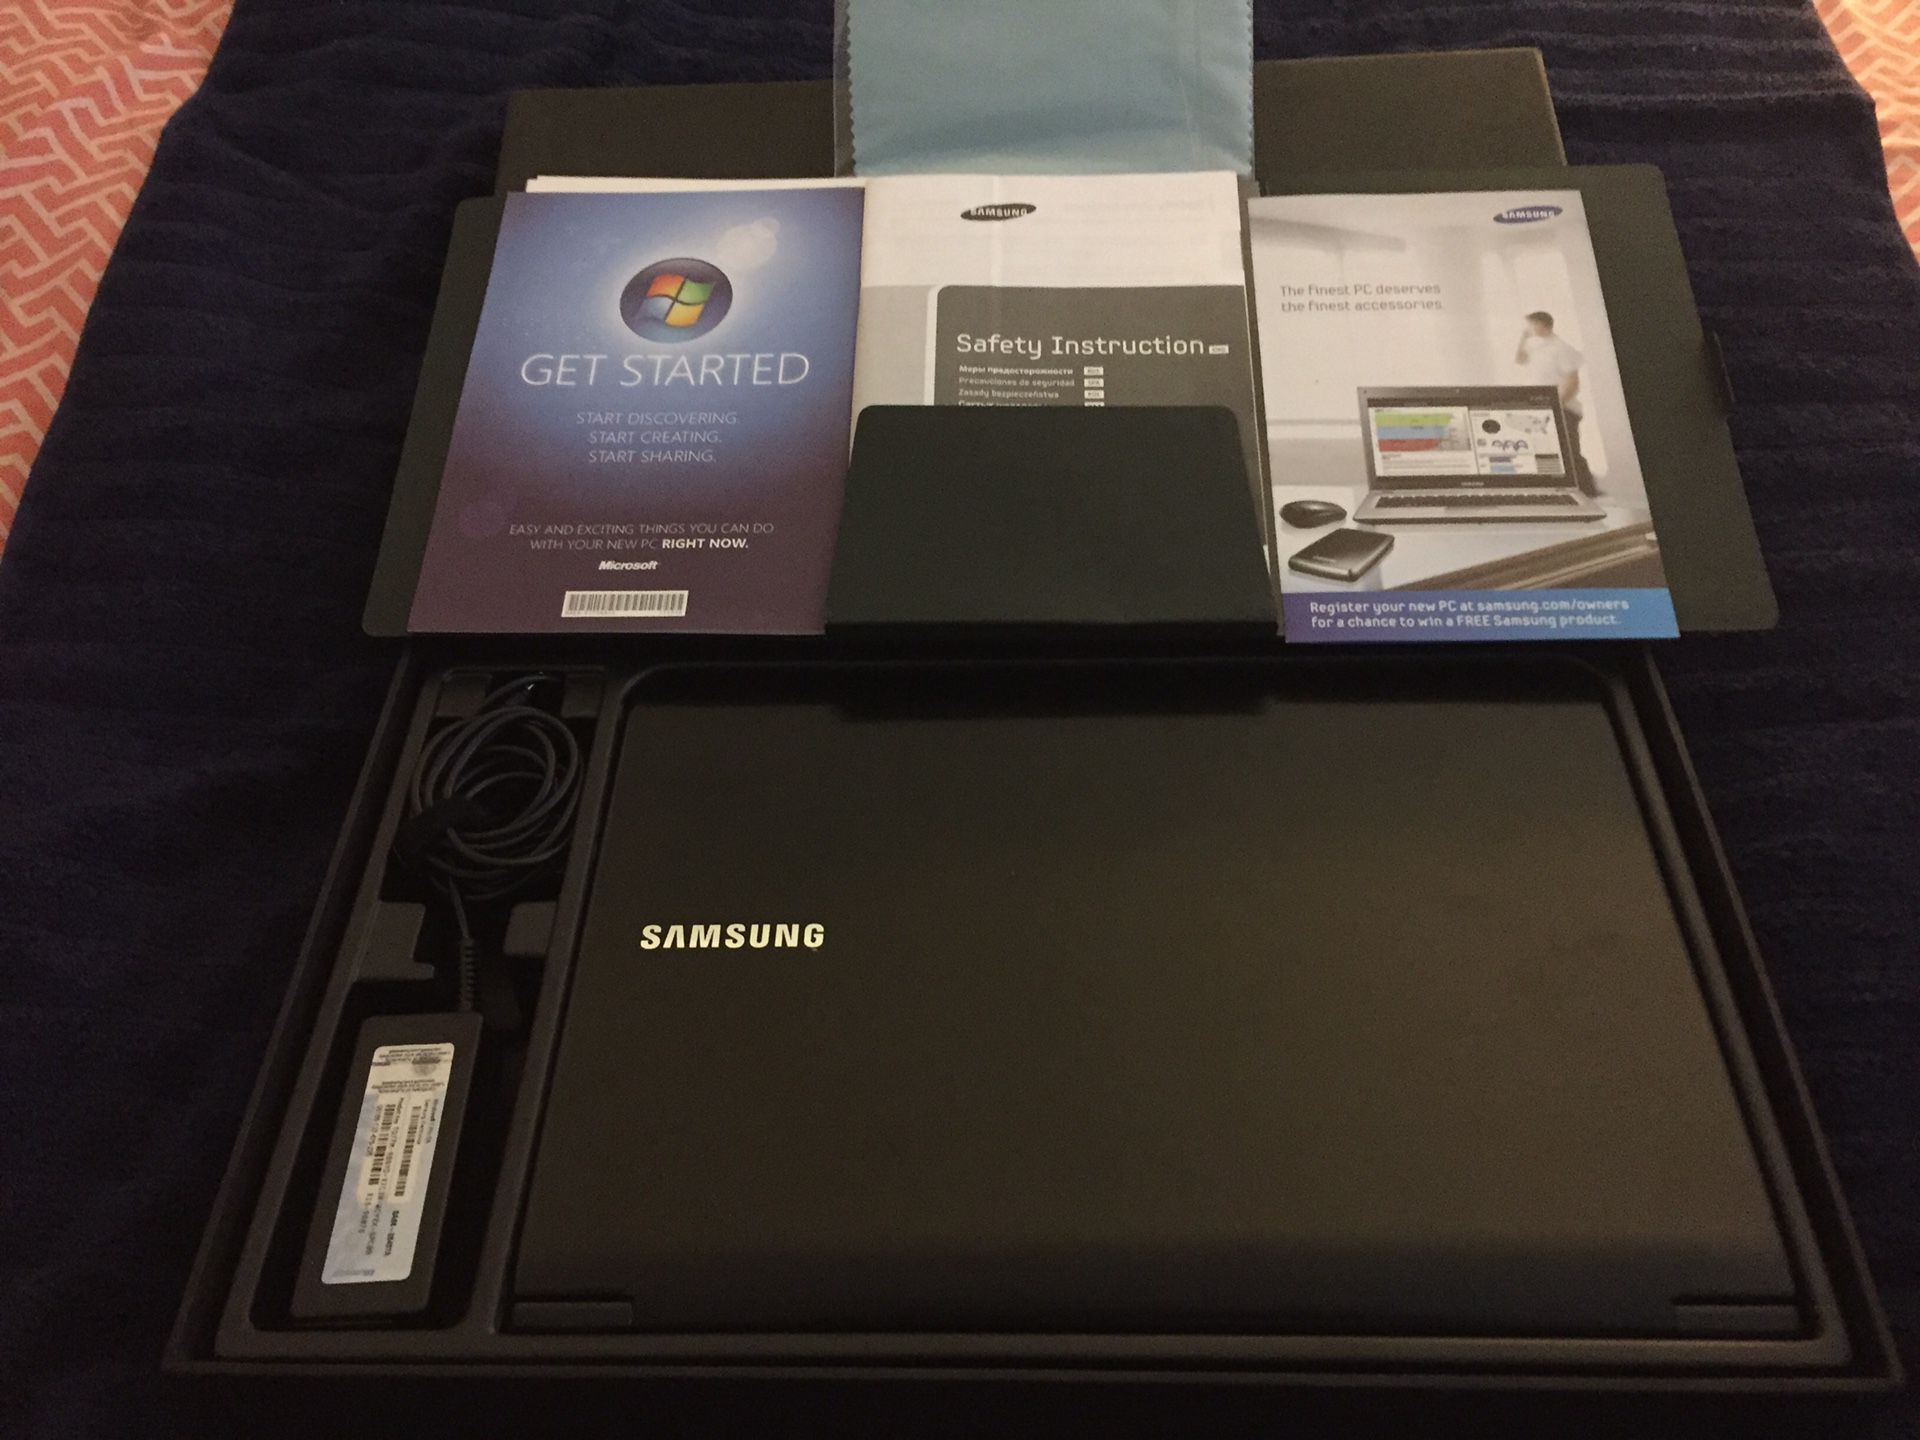 Samsung Notebook Series 9